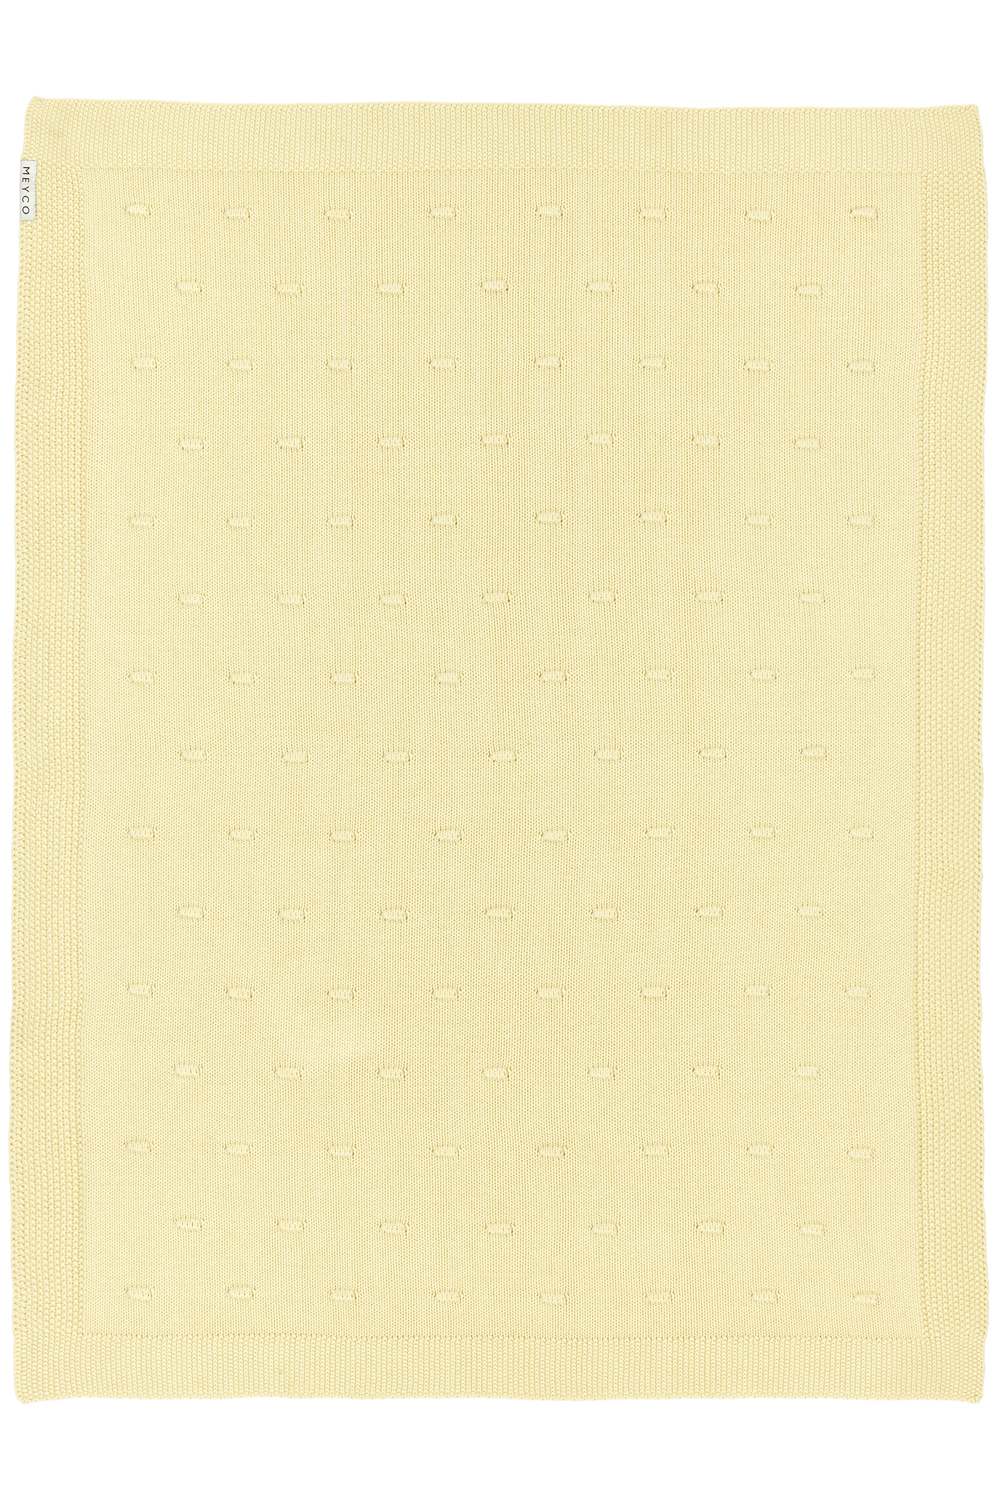 Wiegdeken Knots - soft yellow - 75x100cm